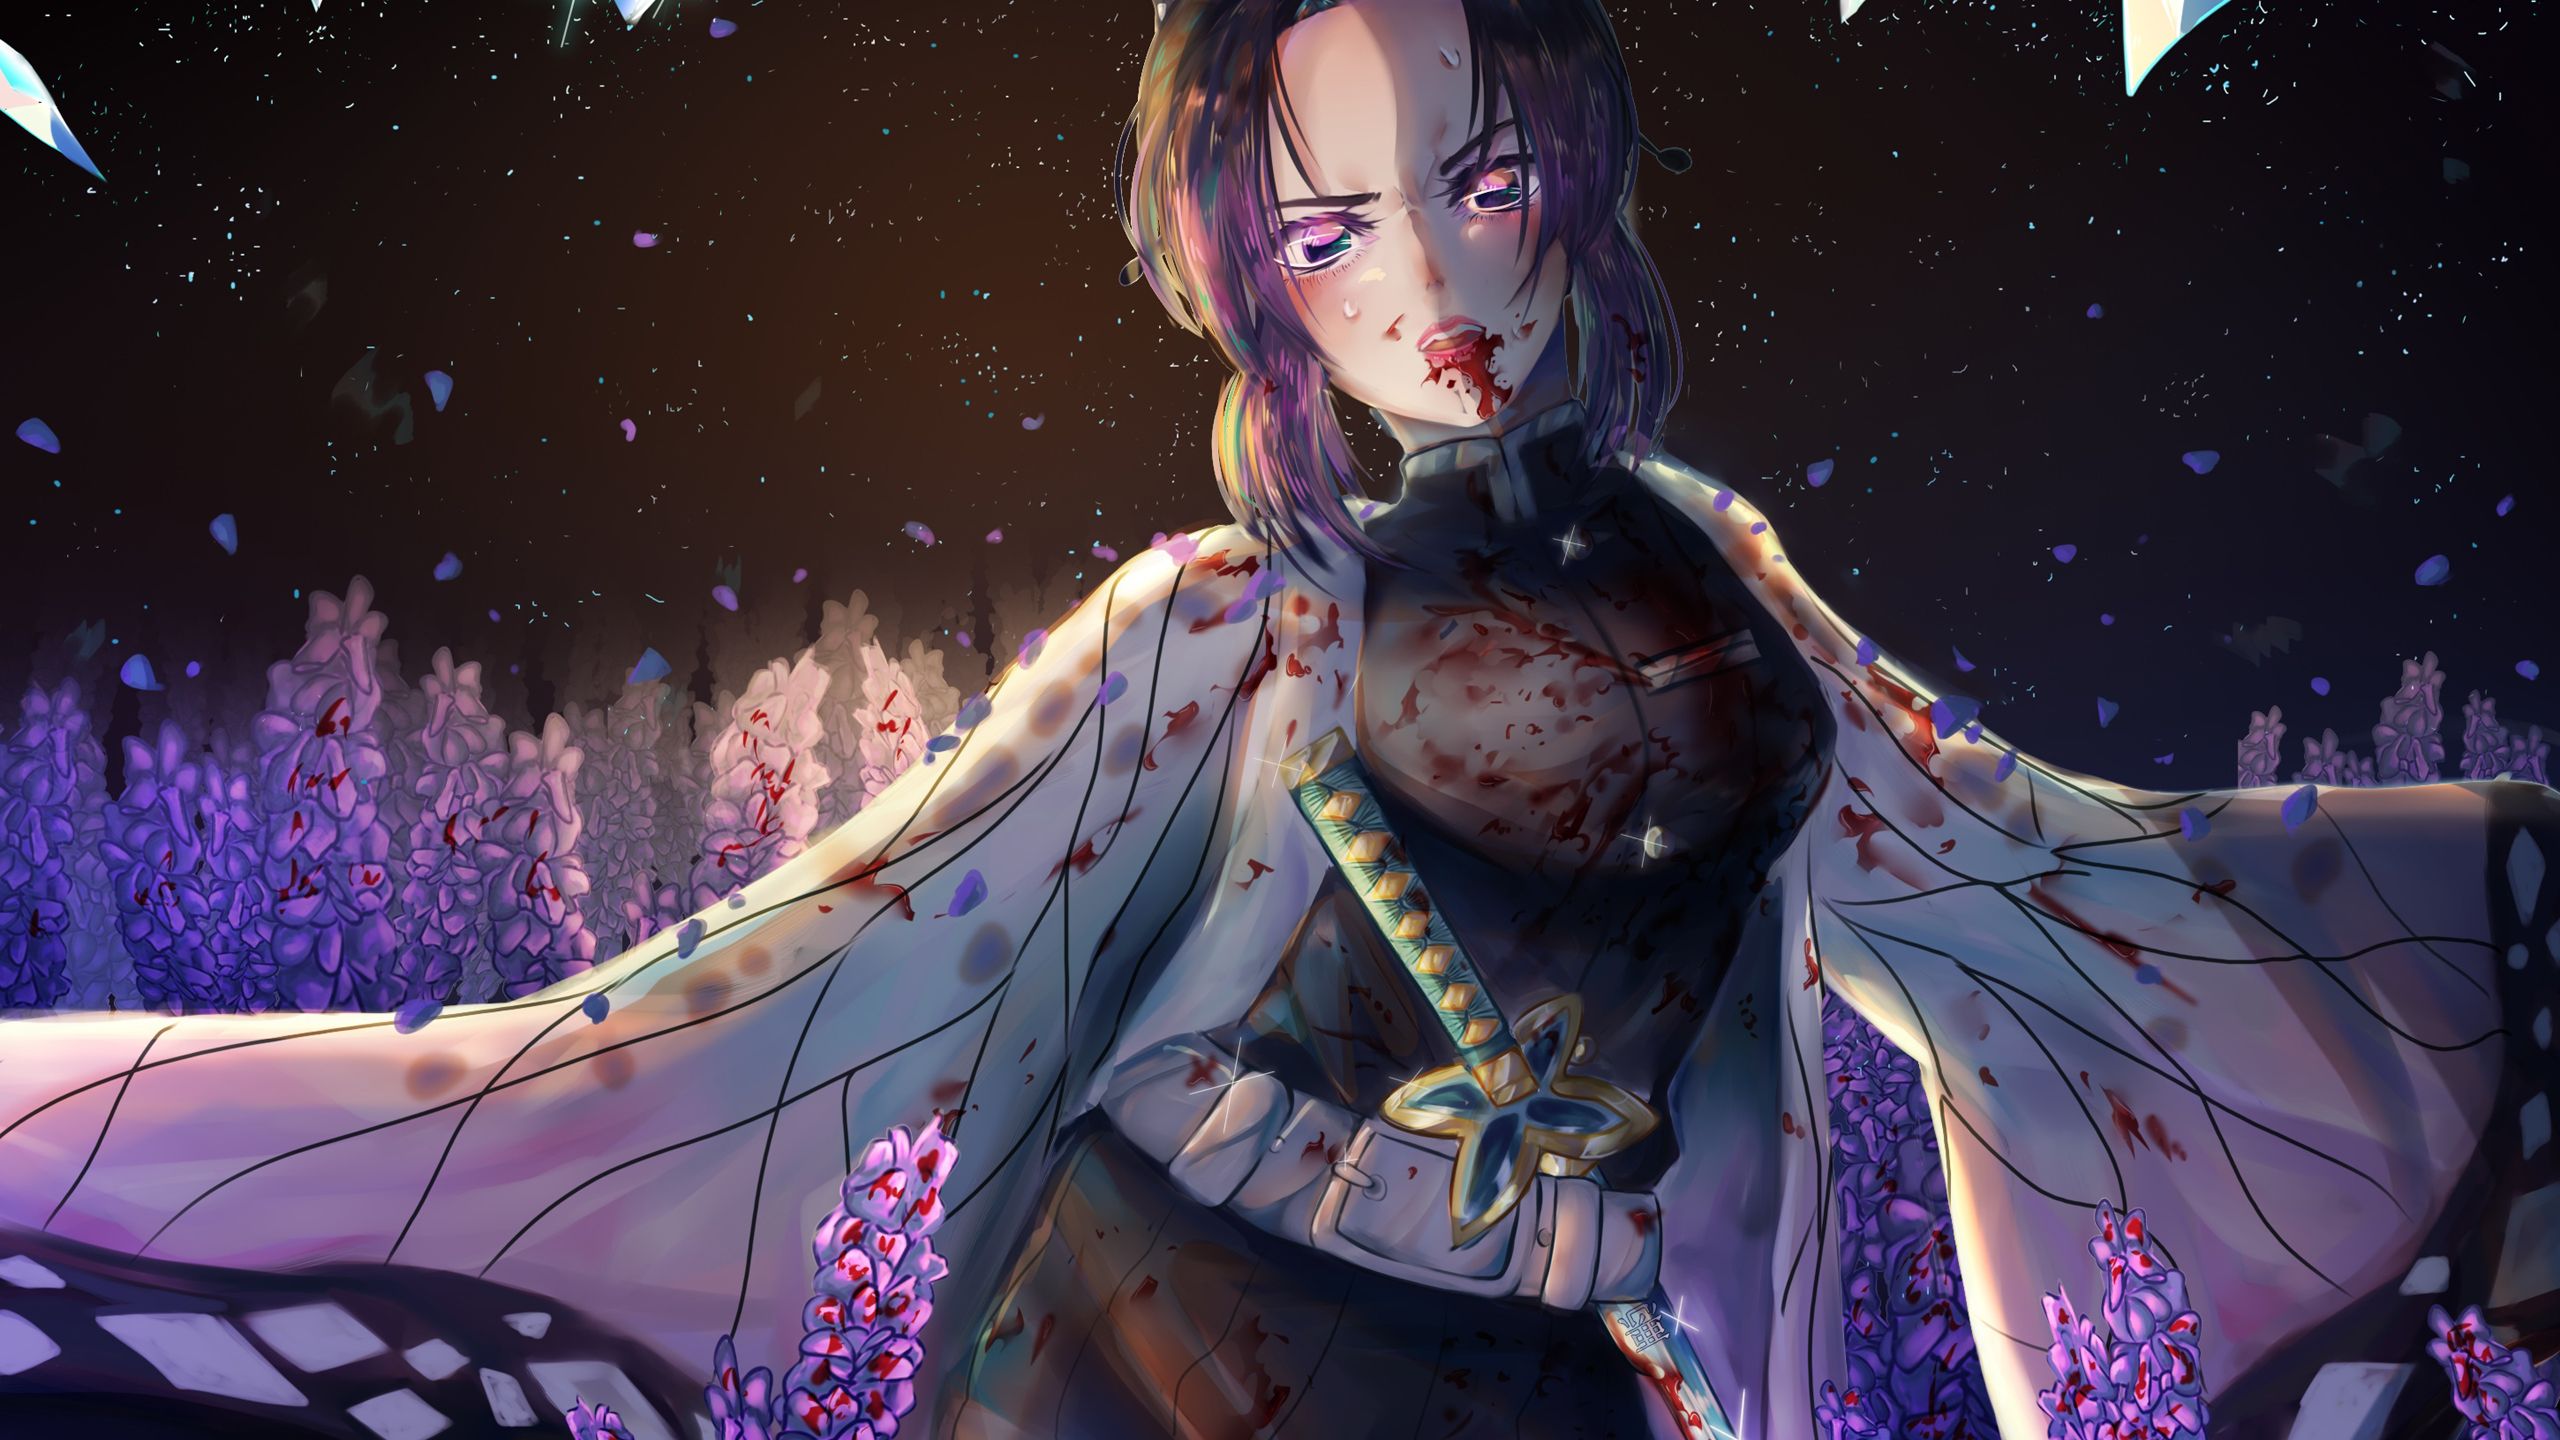 Demon Slayer Shinobu Kochou Standing Around Purple Flowers With Background Of Dark Sky And Stars During Night Time HD Anime Wallpaper